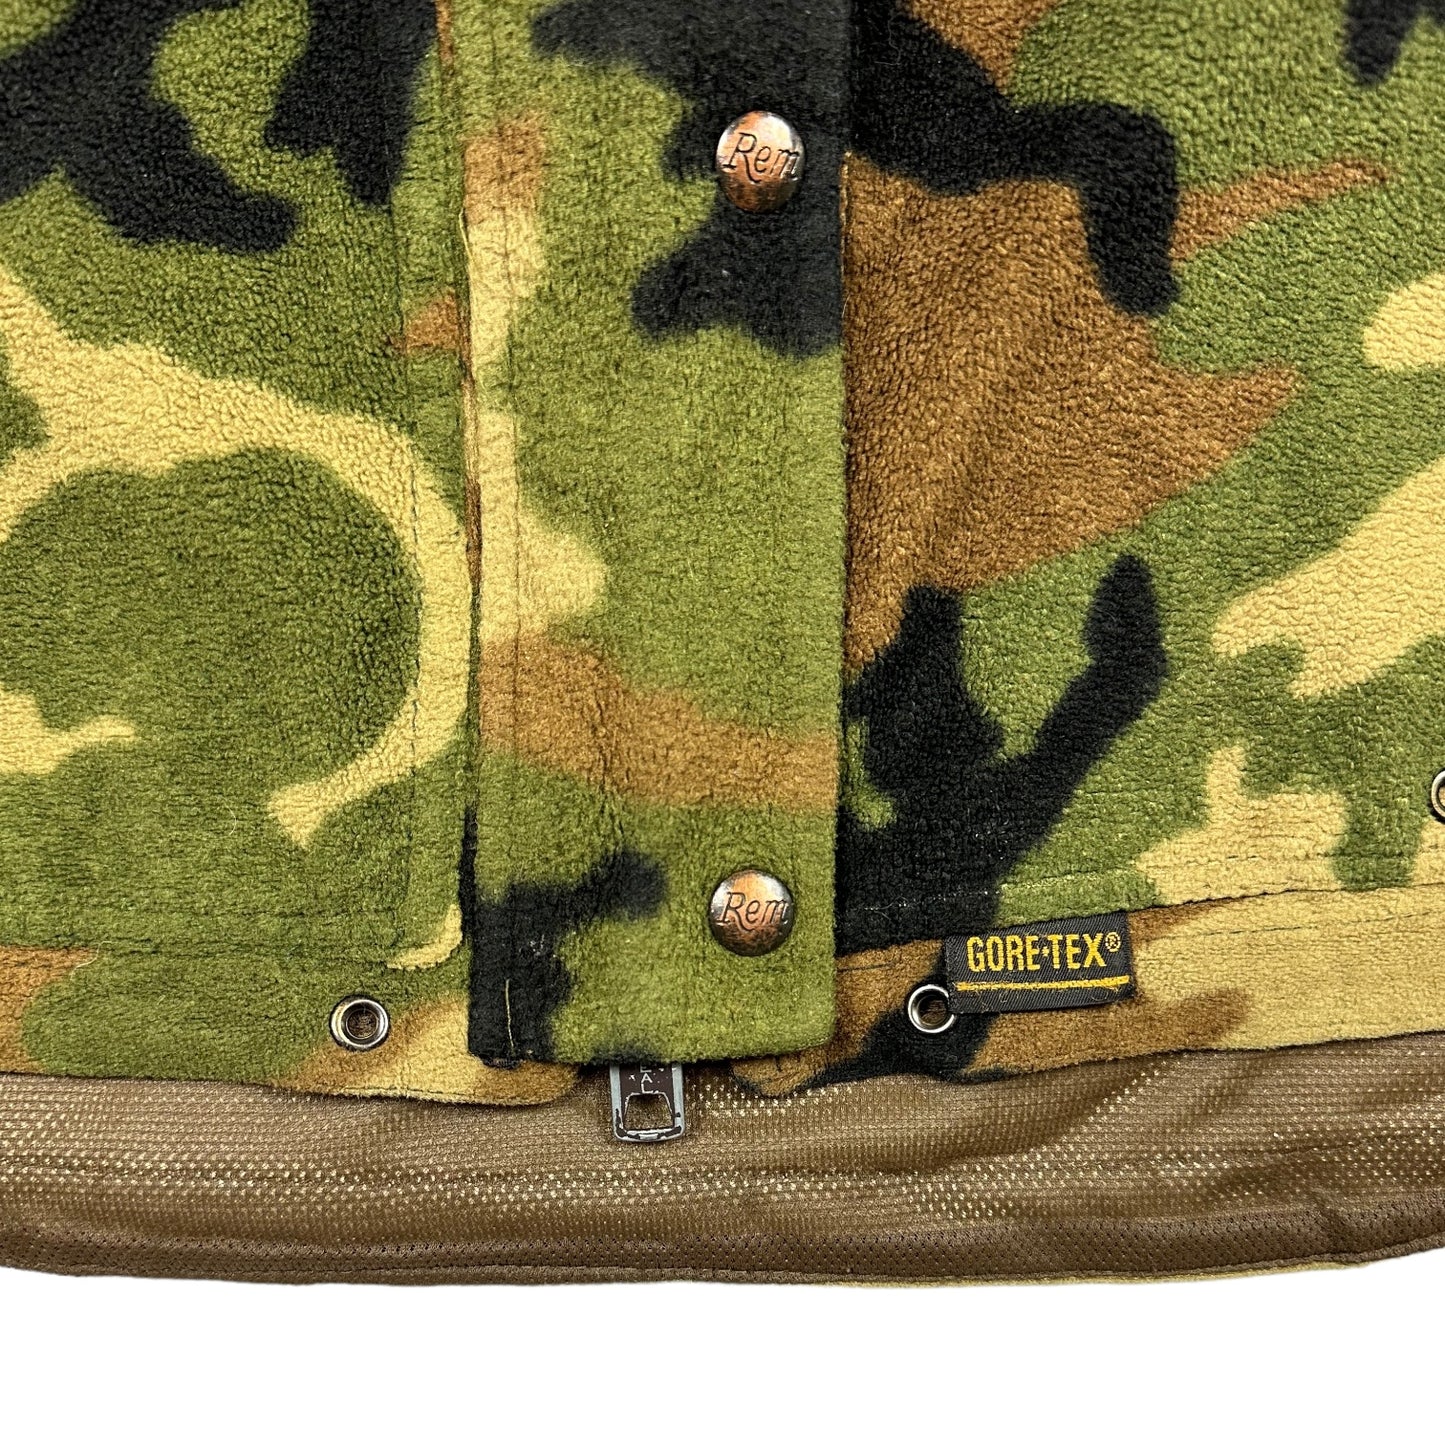 1990s Remington Gore-Tex Camouflage Fleece Jacket